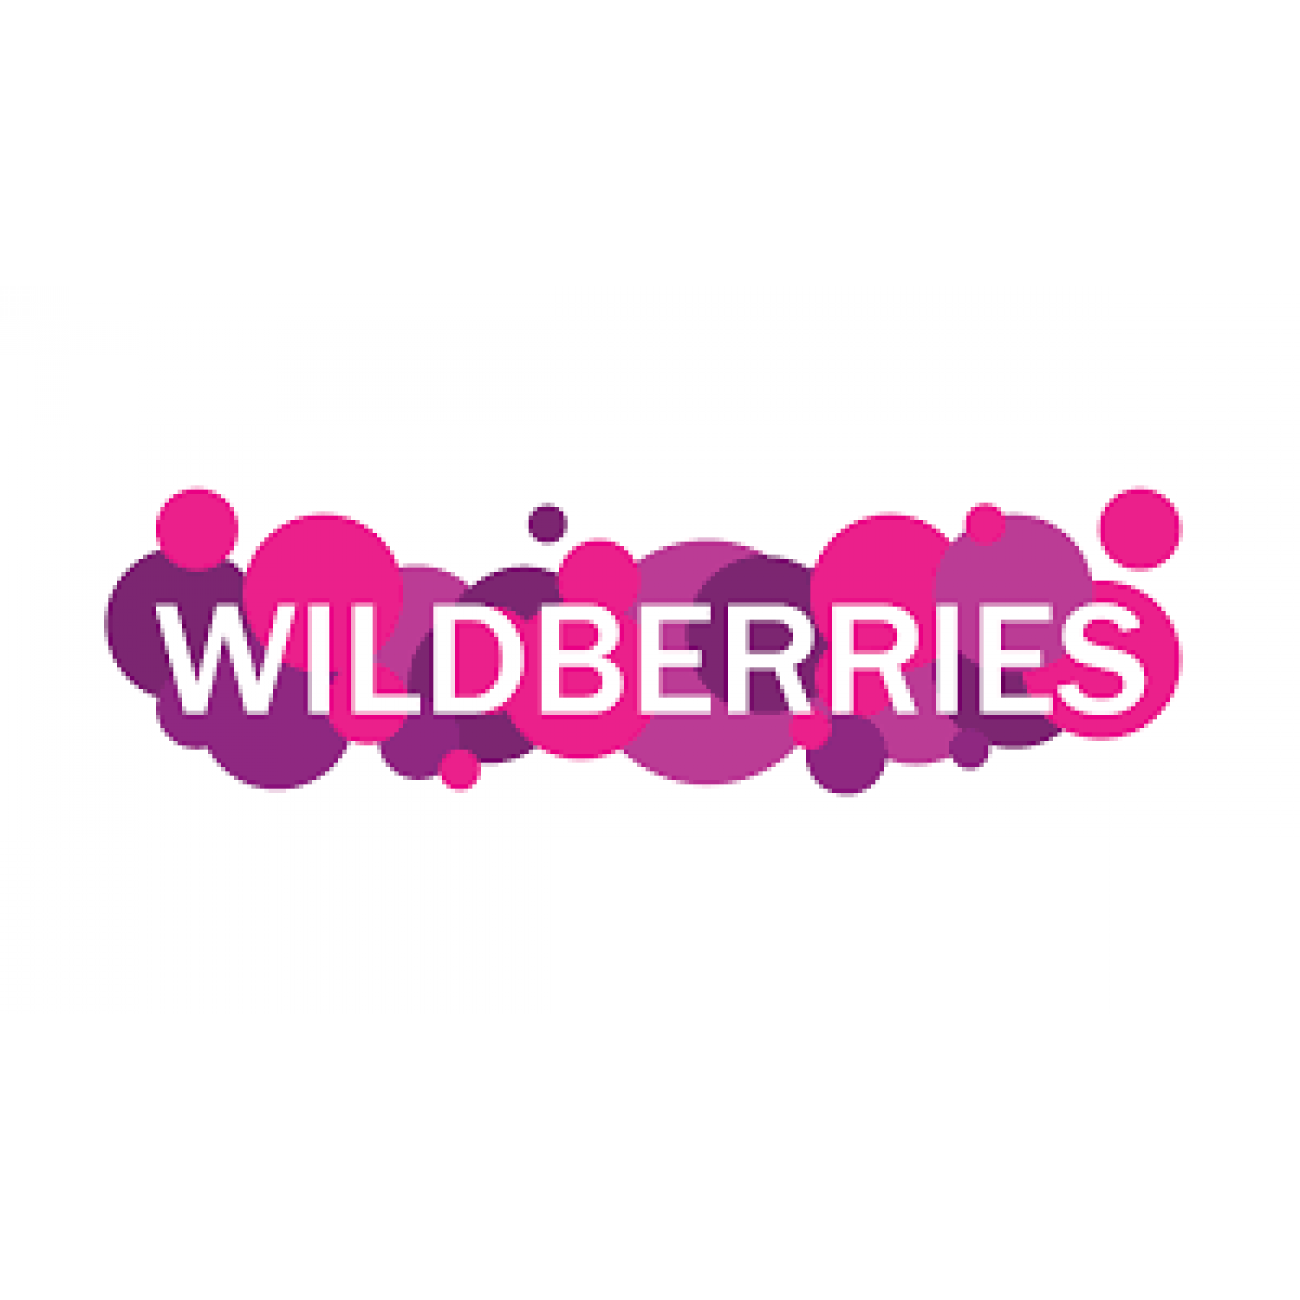 Интернет Магазин Wb Wildberries